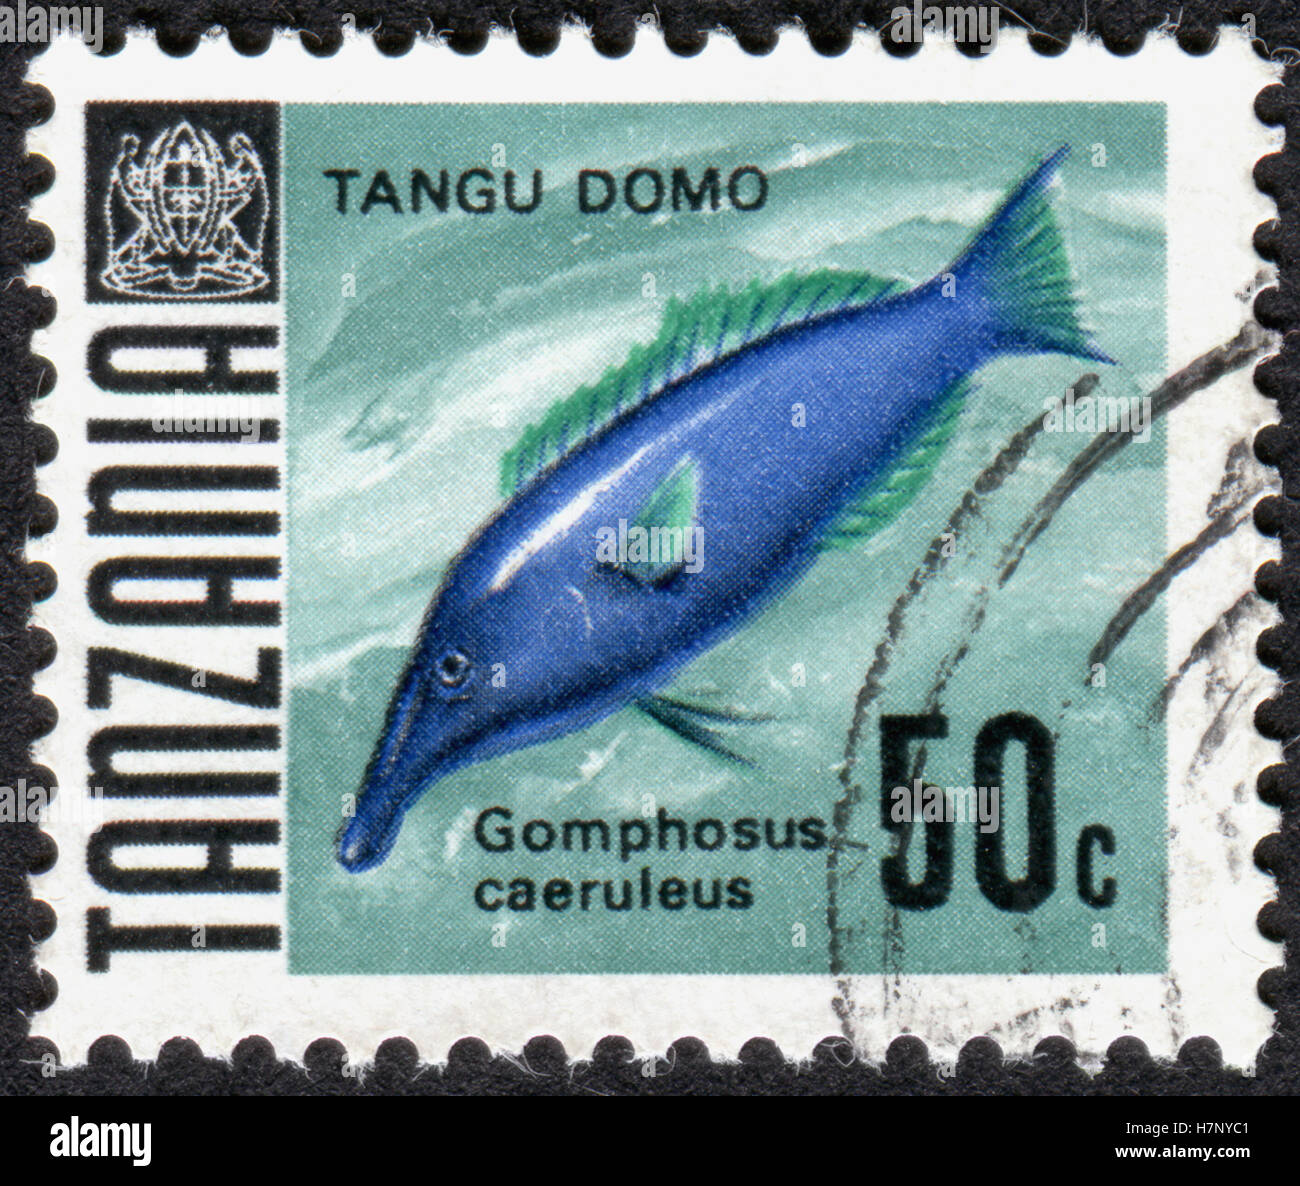 TANZANIA - CIRCA 1962: A stamp printed in Tanzania shows a aquarium fish Gomphosus caeruleus, circa 1962 Stock Photo